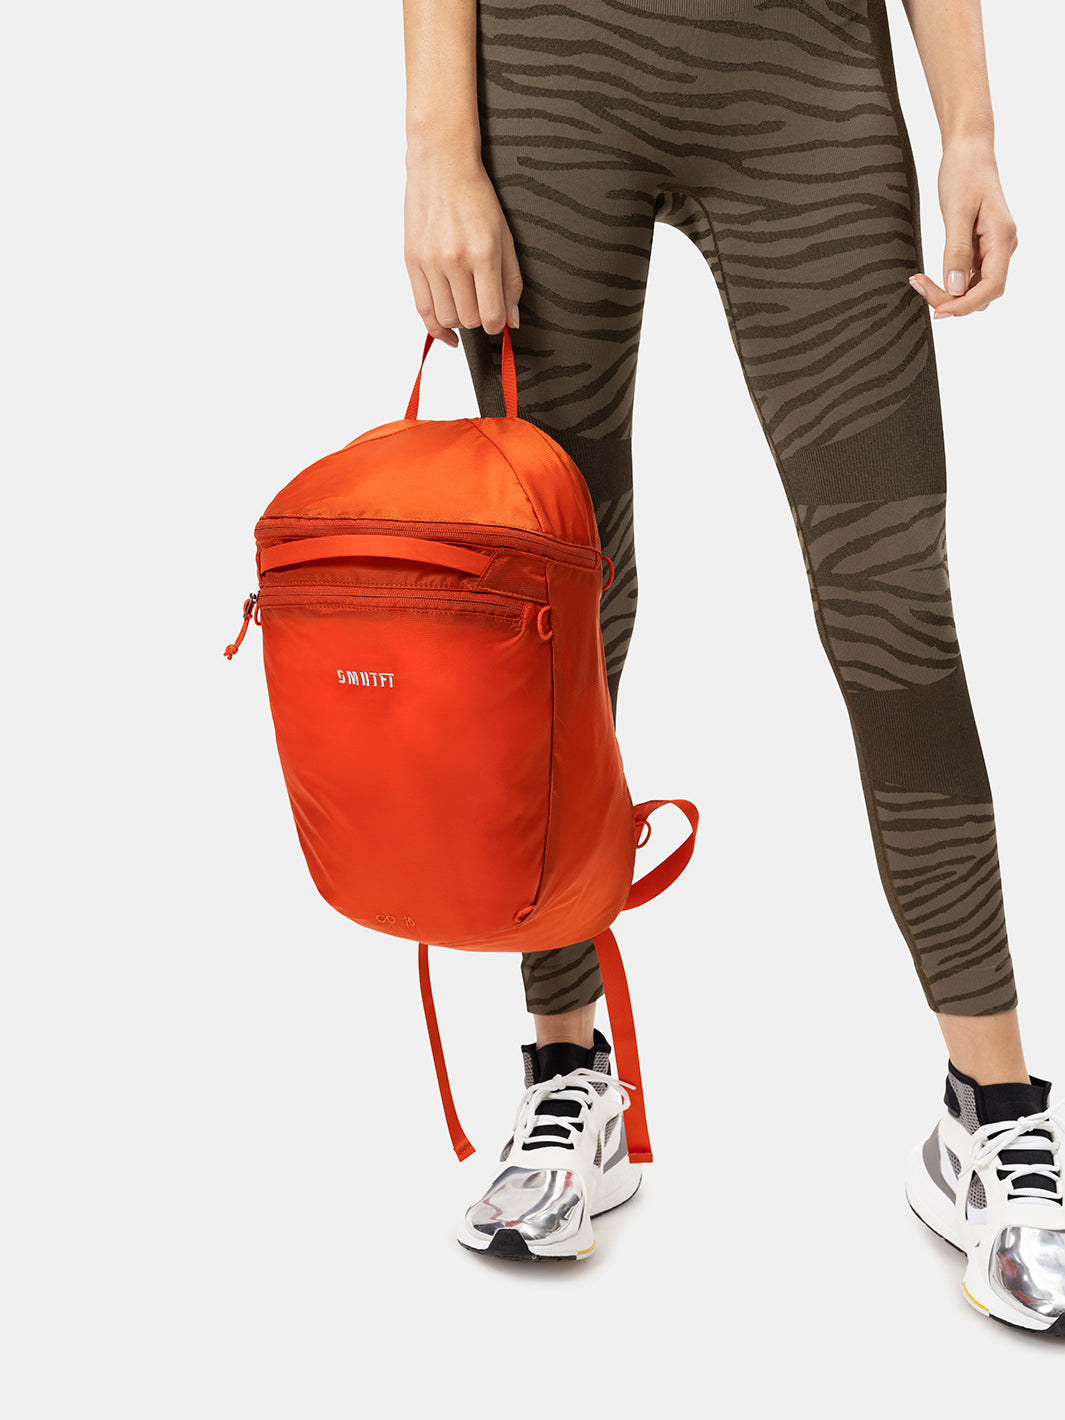 Best Backpack To Workout | Orange Backpack | Backpack For Women